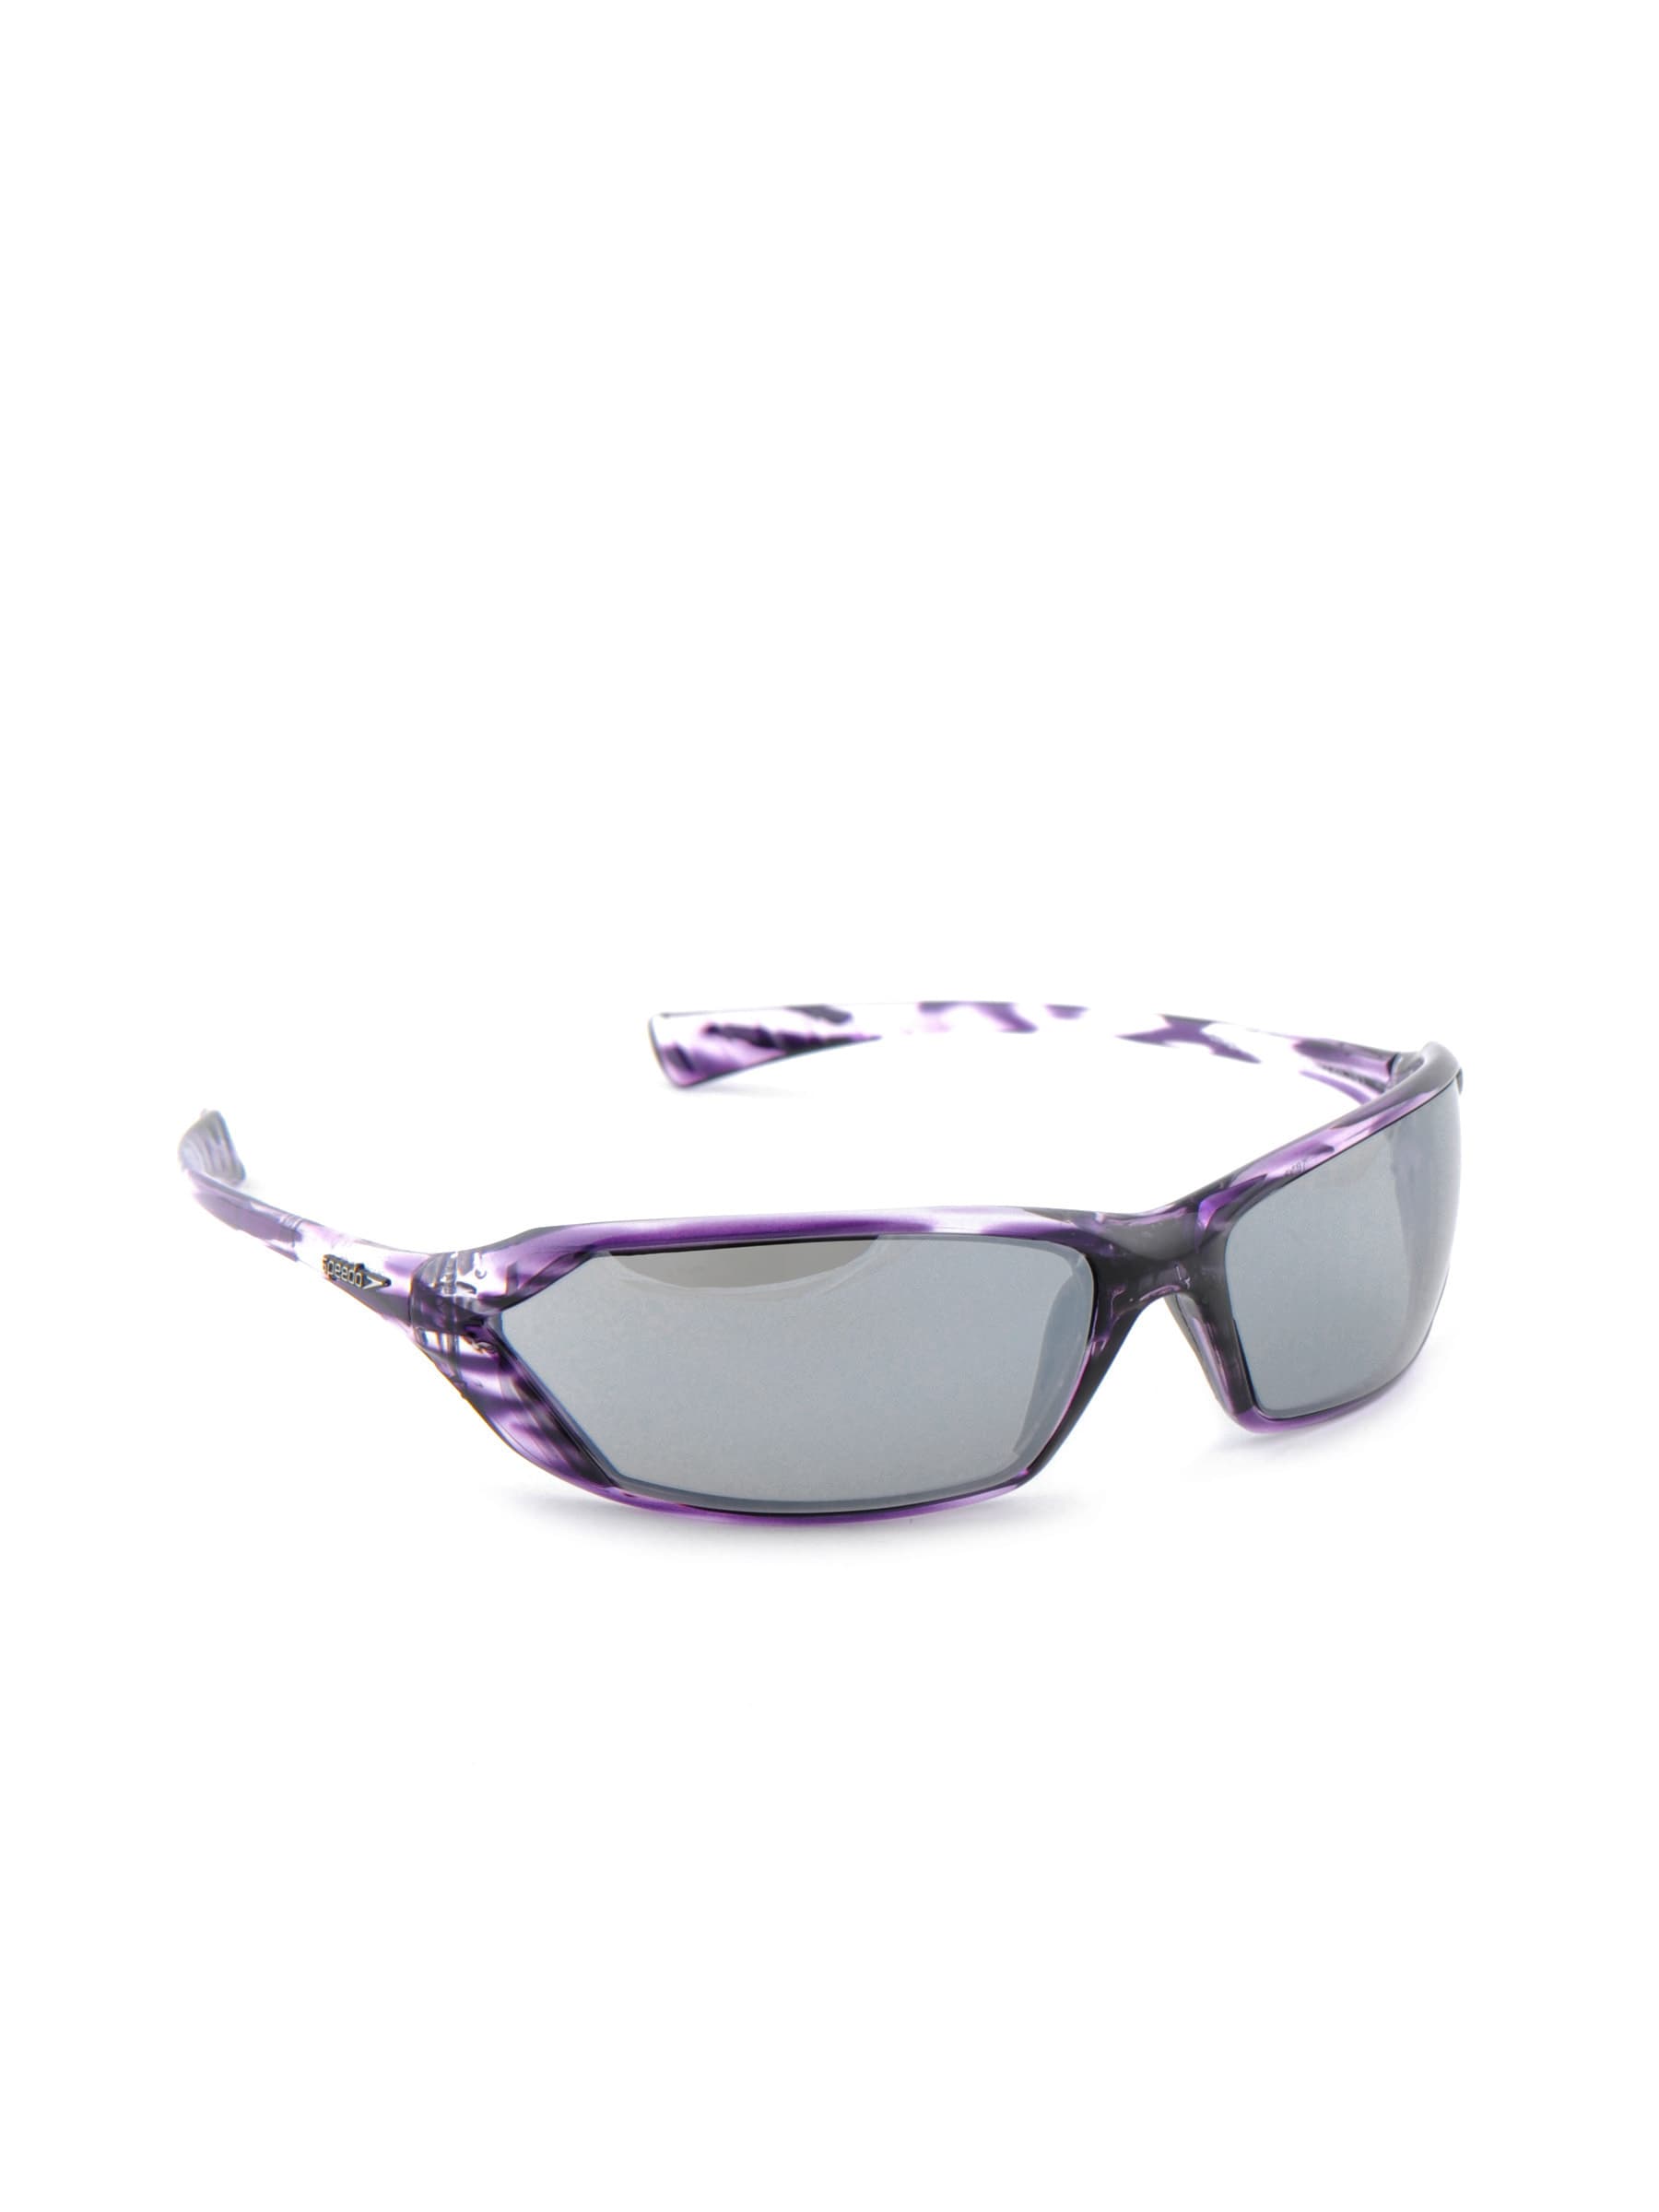 Speedo Unisex Funky Eyewear Purple Sunglasses